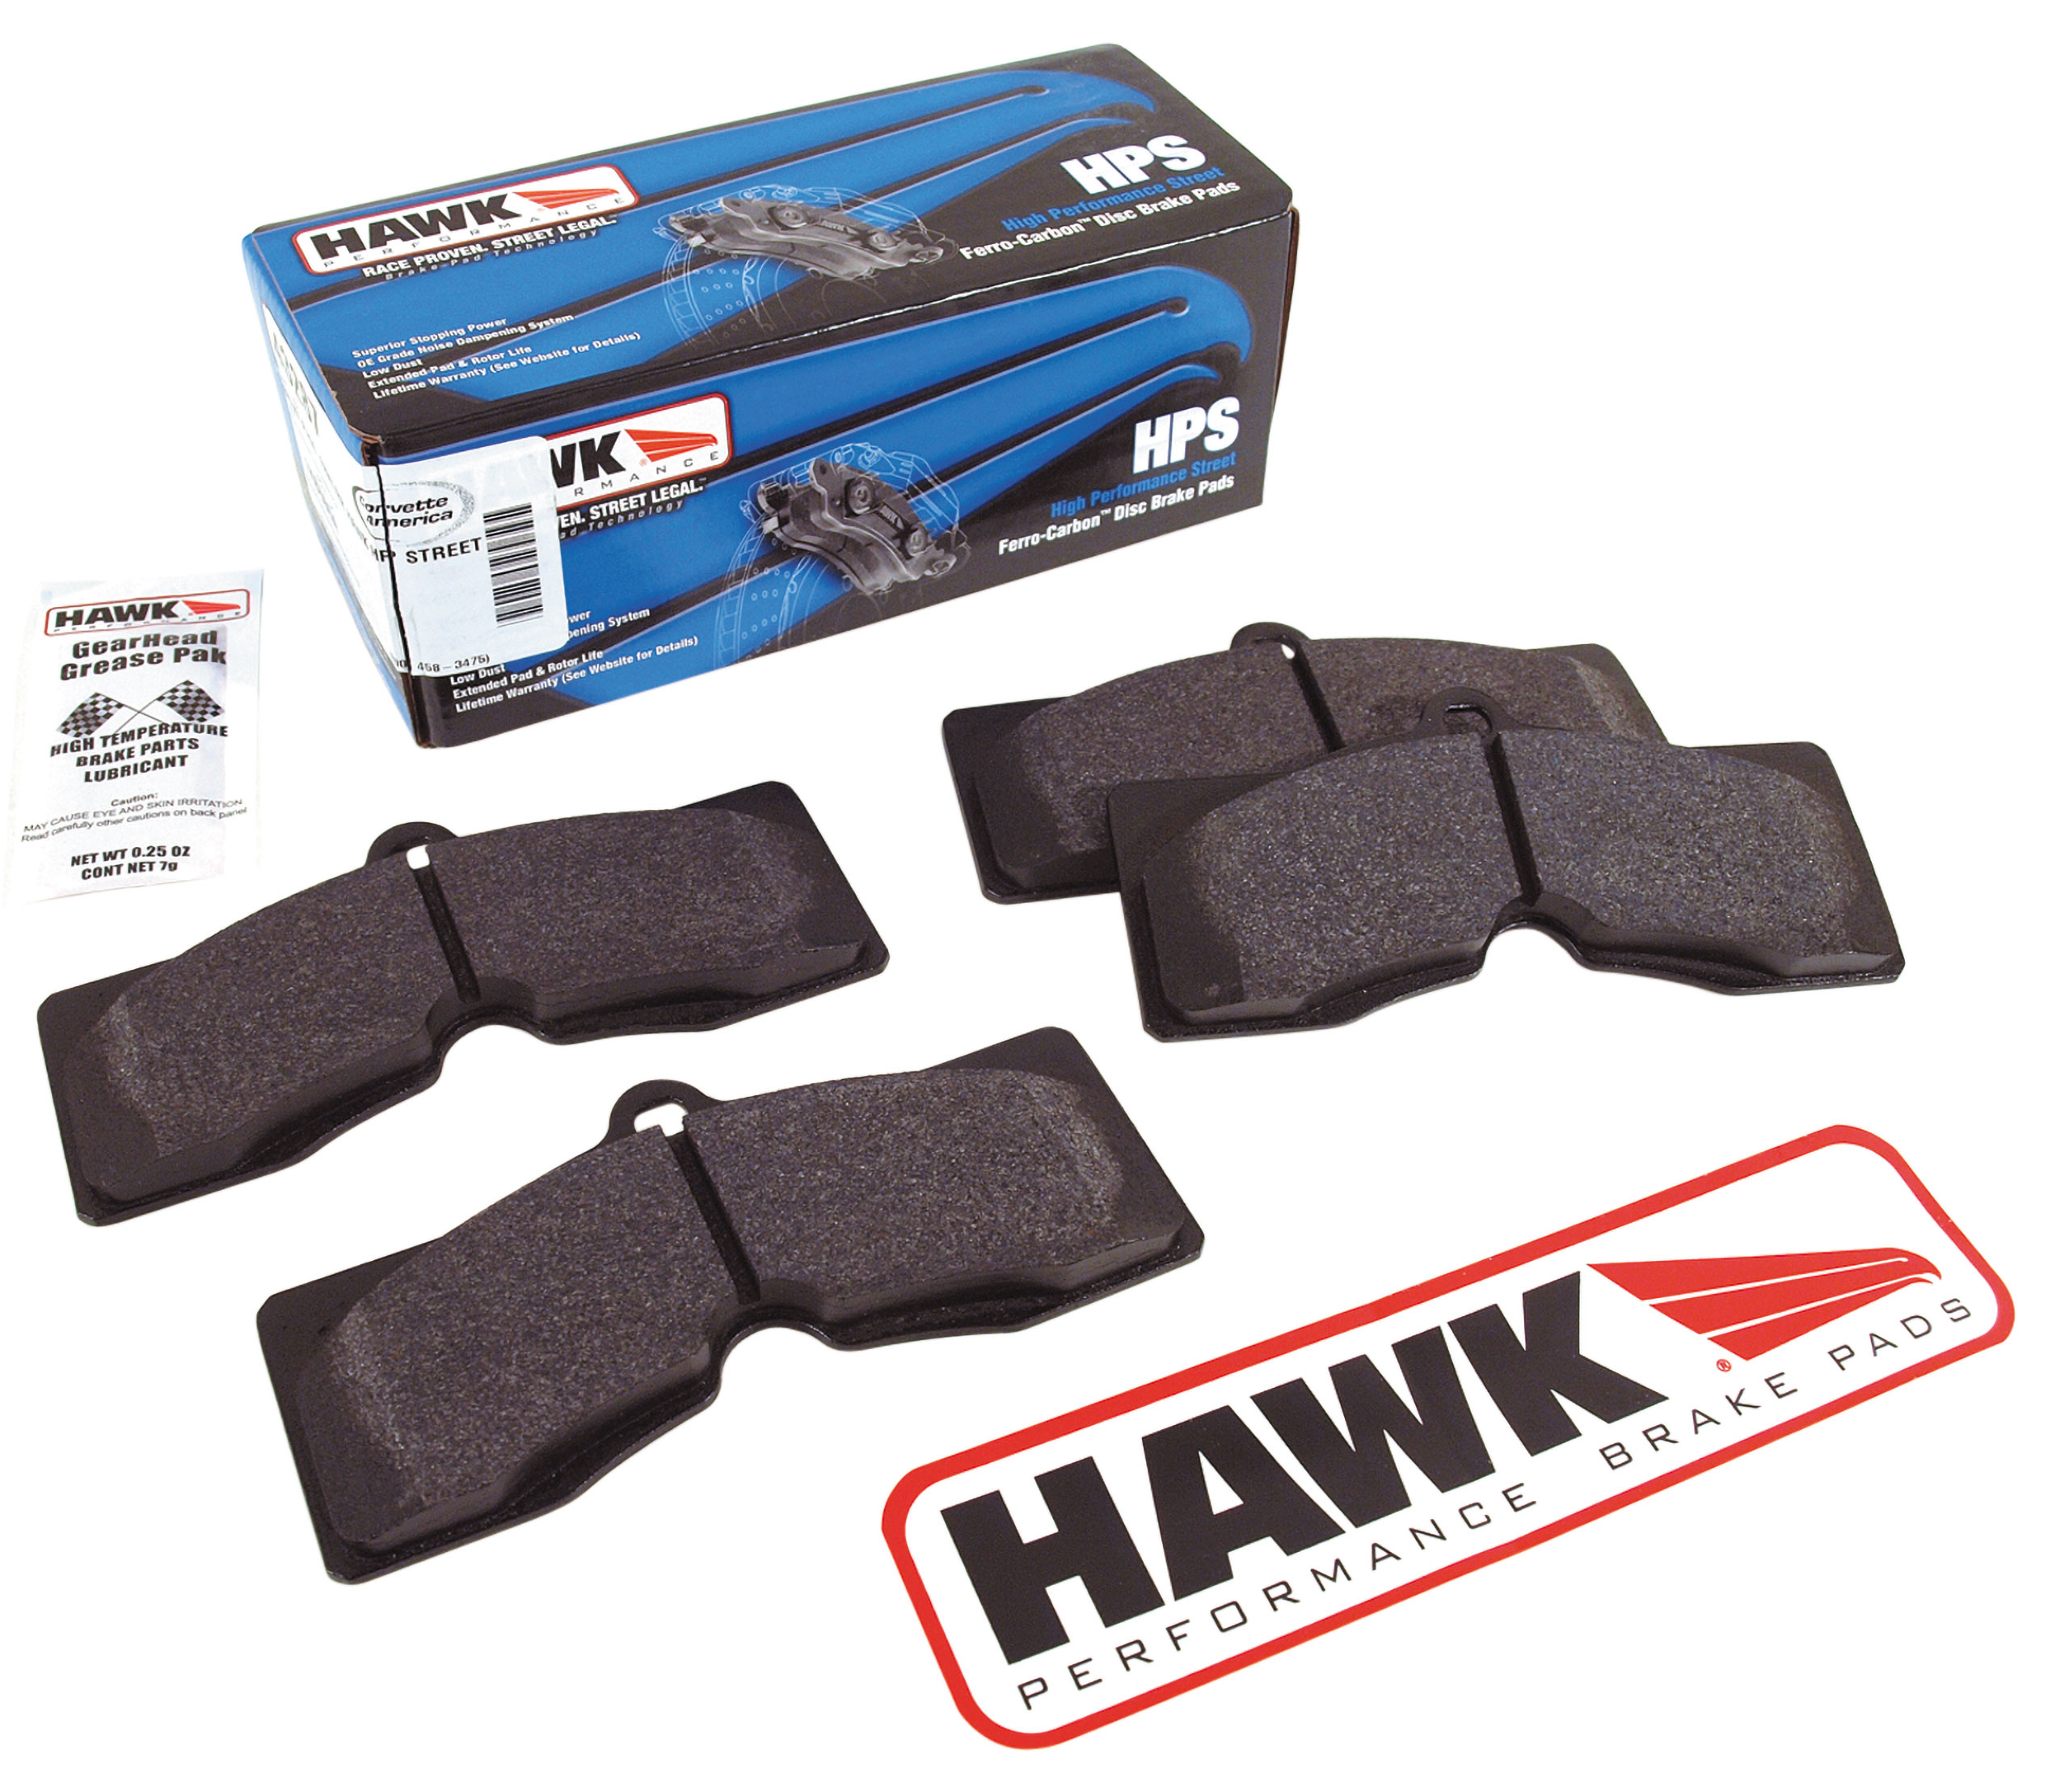 Hawk Performance 1965-1982 Chevrolet Corvette Brake Pads. Front/Rear Hawk HP Street - 2 Required